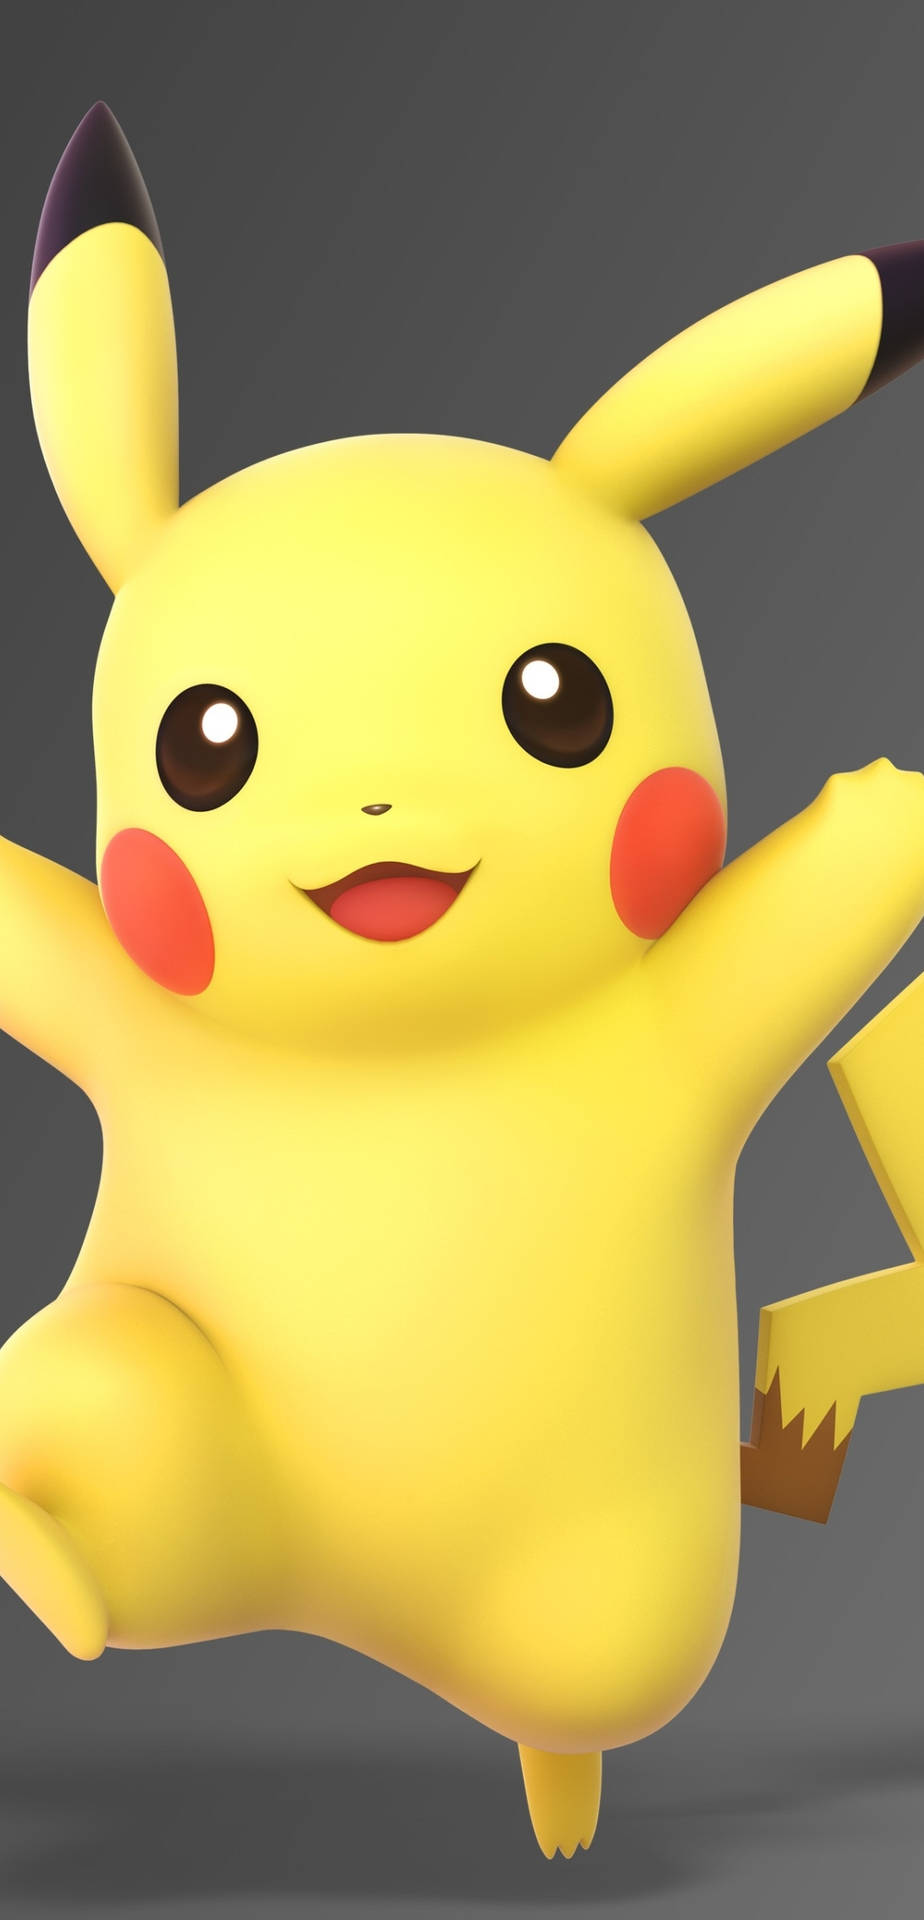 Pikachu 3d From Pokémon Yellow Background